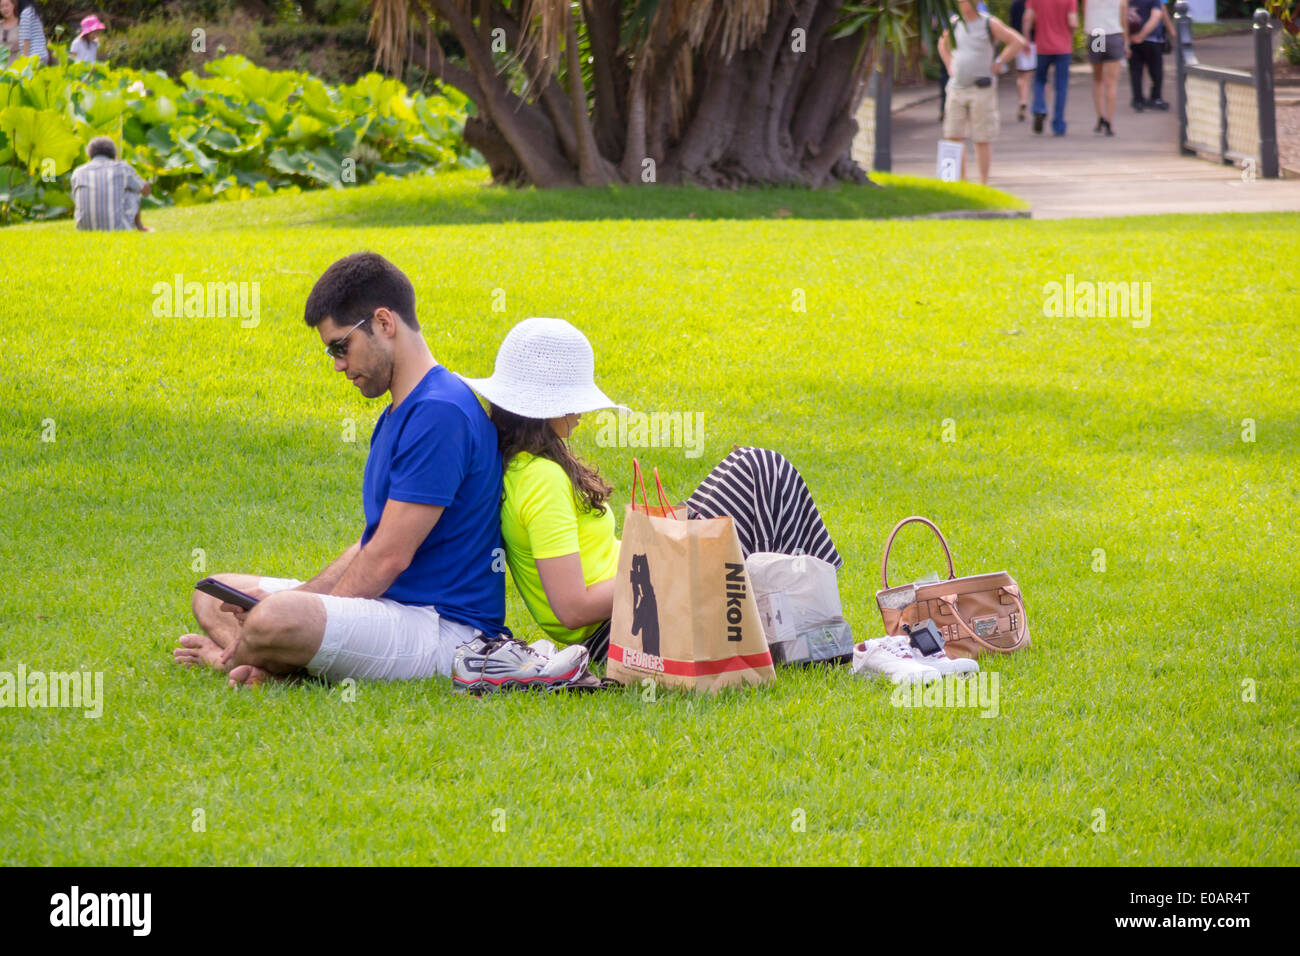 Sydney Australia,Royal Botanic Gardens,man men male,woman female women,couple,back to back,lawn,sitting,using,tablet,park,AU140309172 Stock Photo